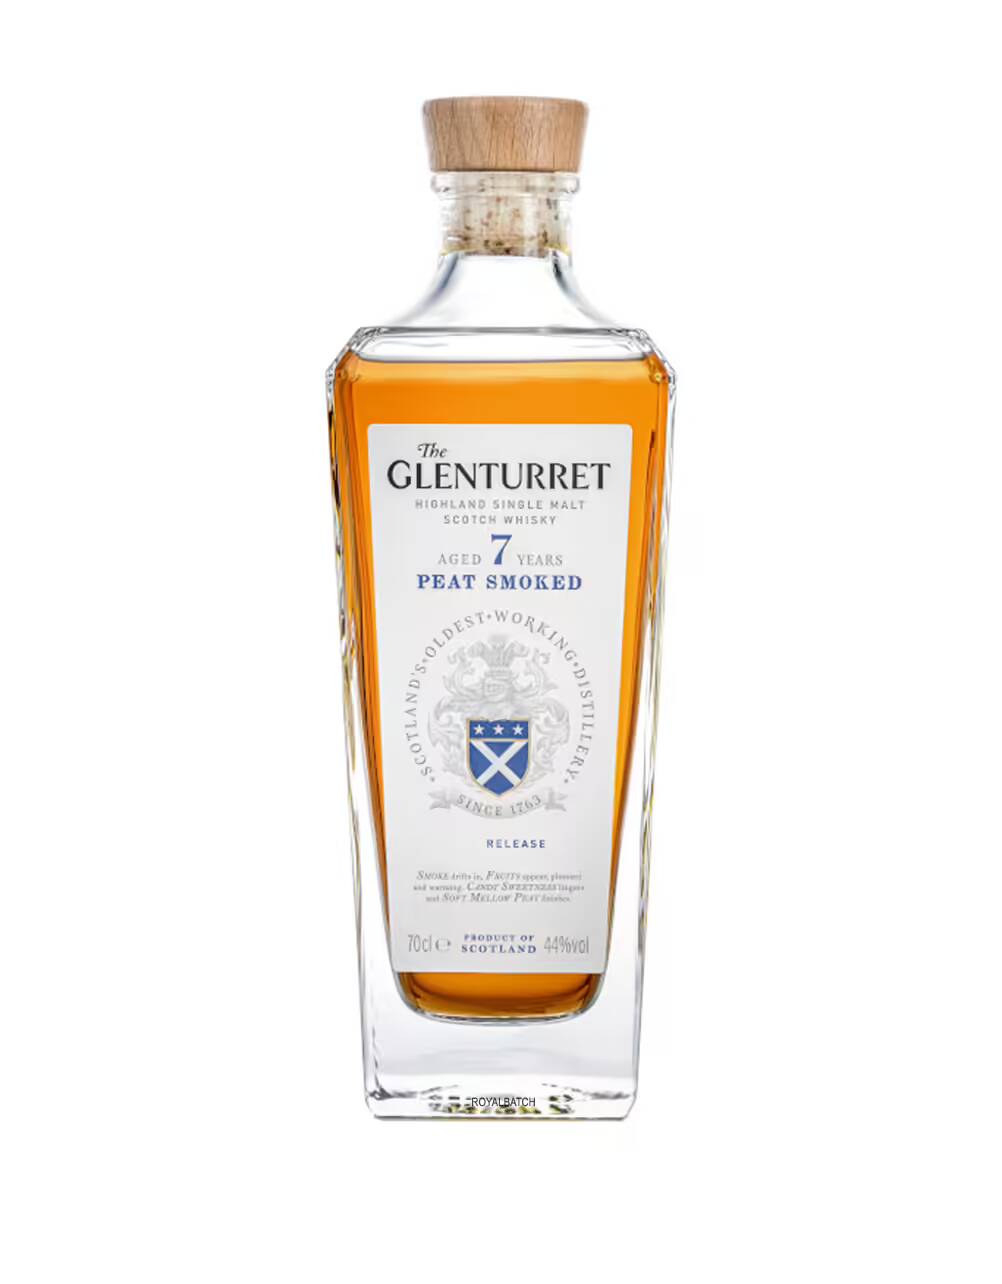 The Glenturret Peat Smoked 7 Year Old Single Malt Scotch Whisky